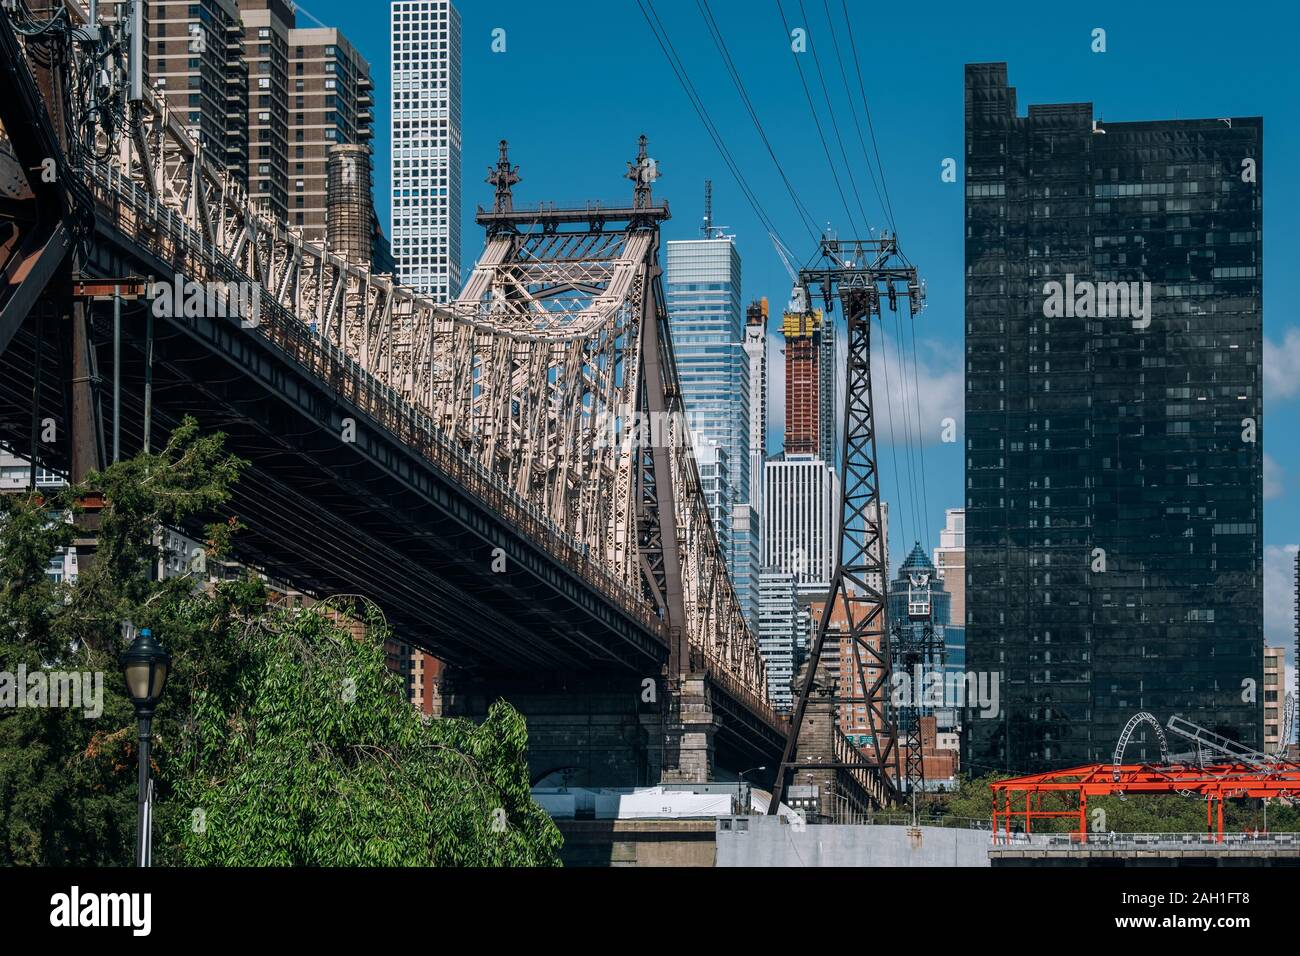 New York City - USA - 15 mai 2019 : Queensboro Bridge et tramway de Manhattan Midtown sur Roosevelt Island Banque D'Images